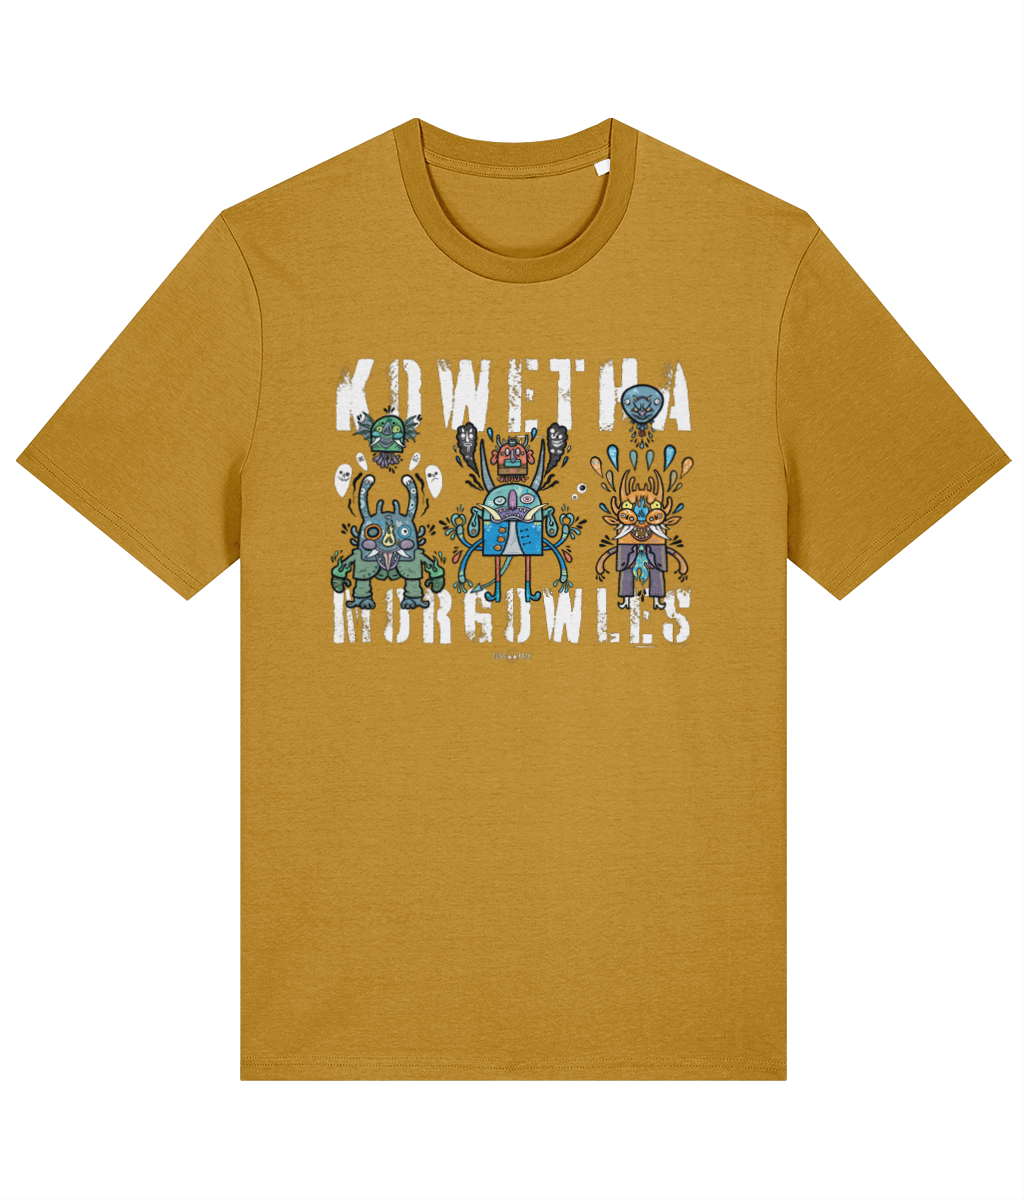 Kowetha Morgowles - Kernewek T-shirt